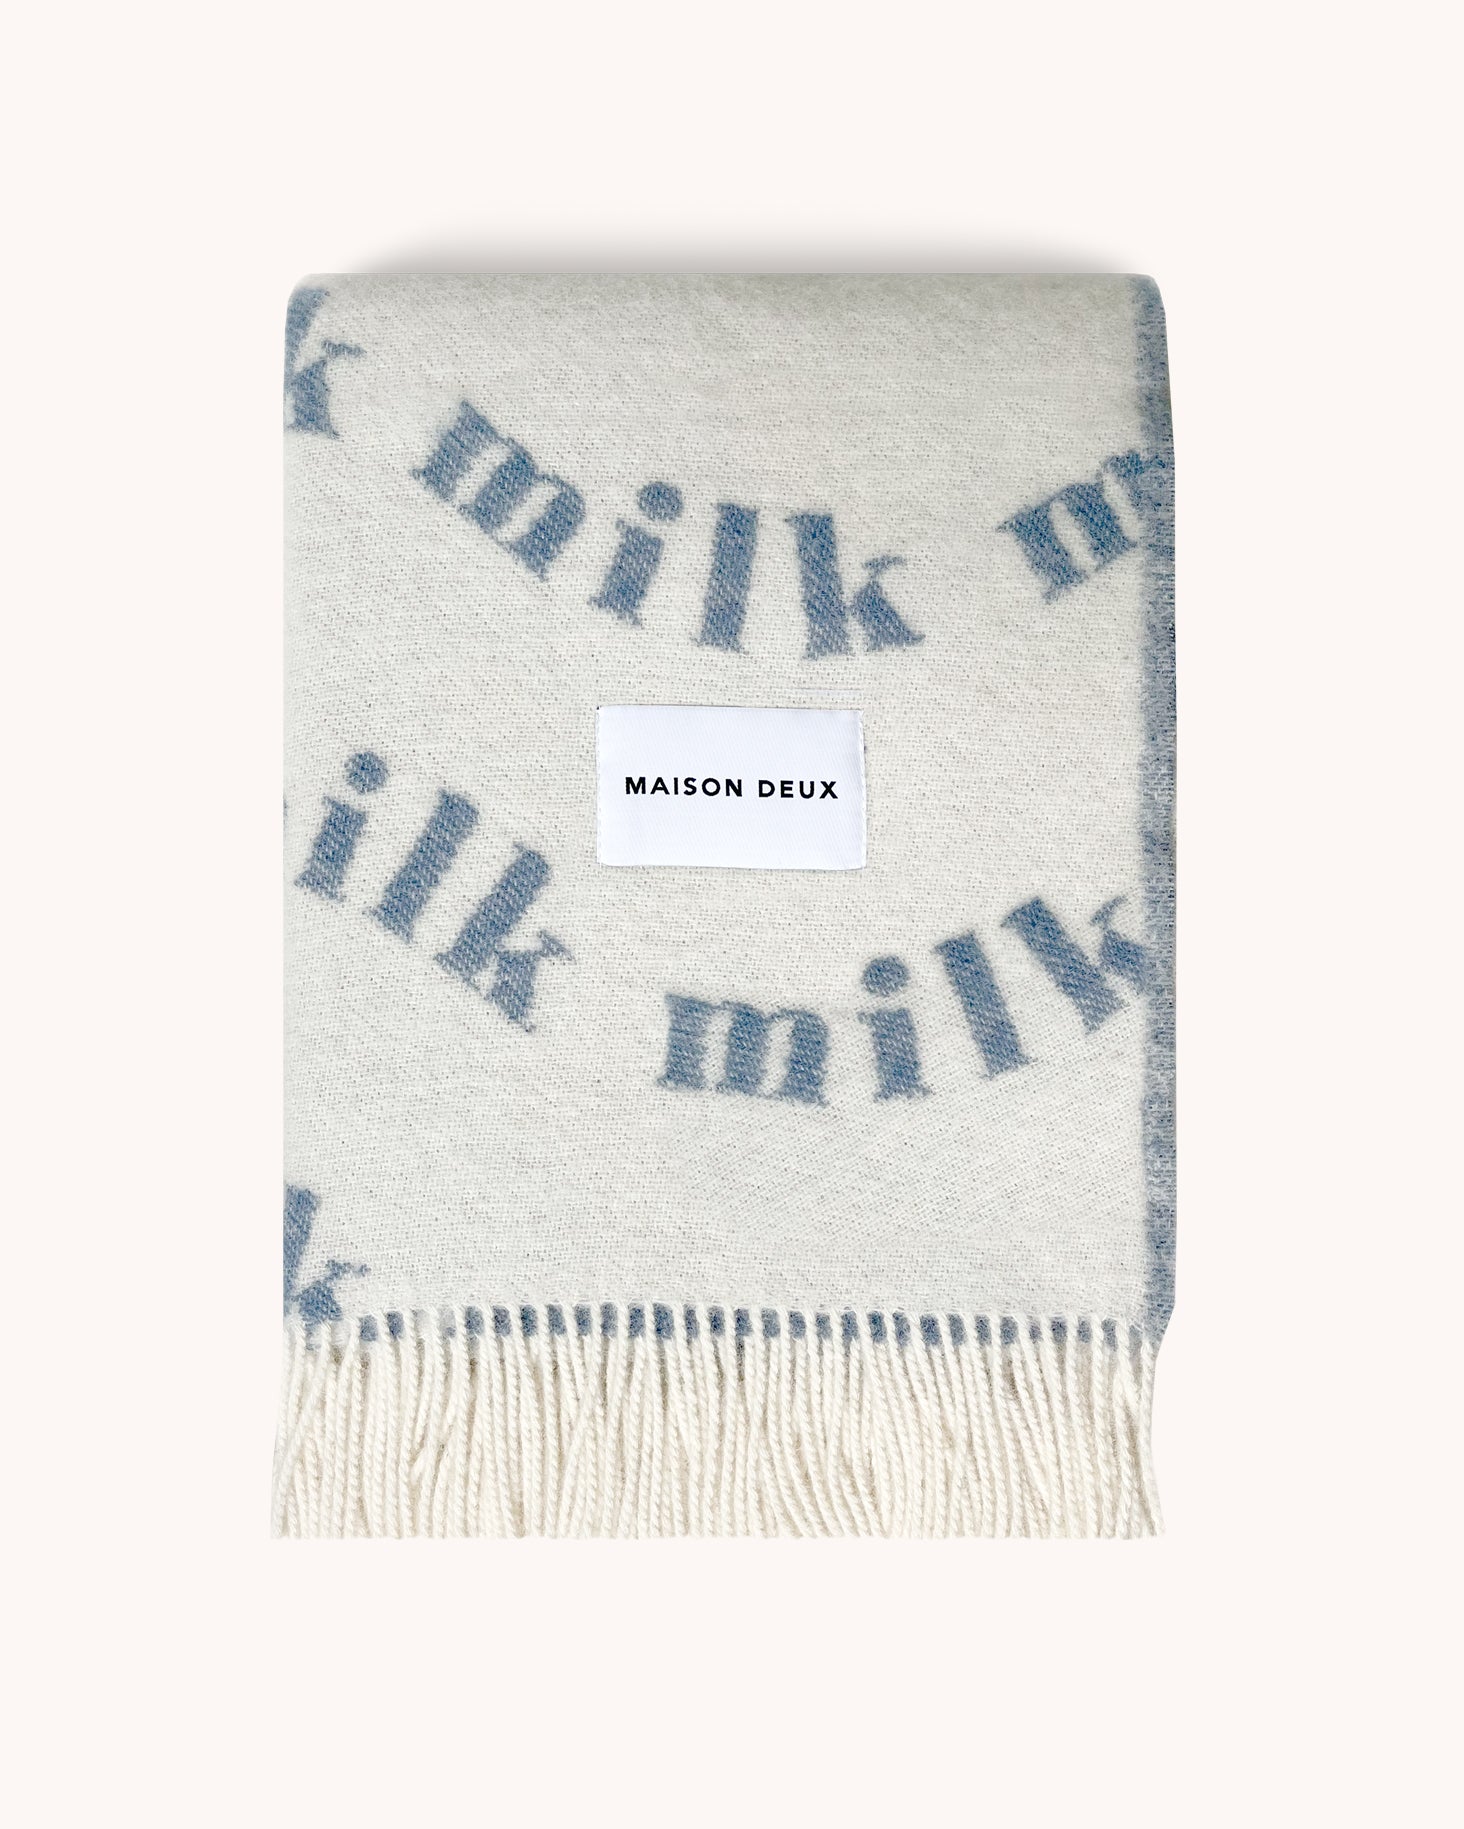 Milk Blanket - Sample Sale